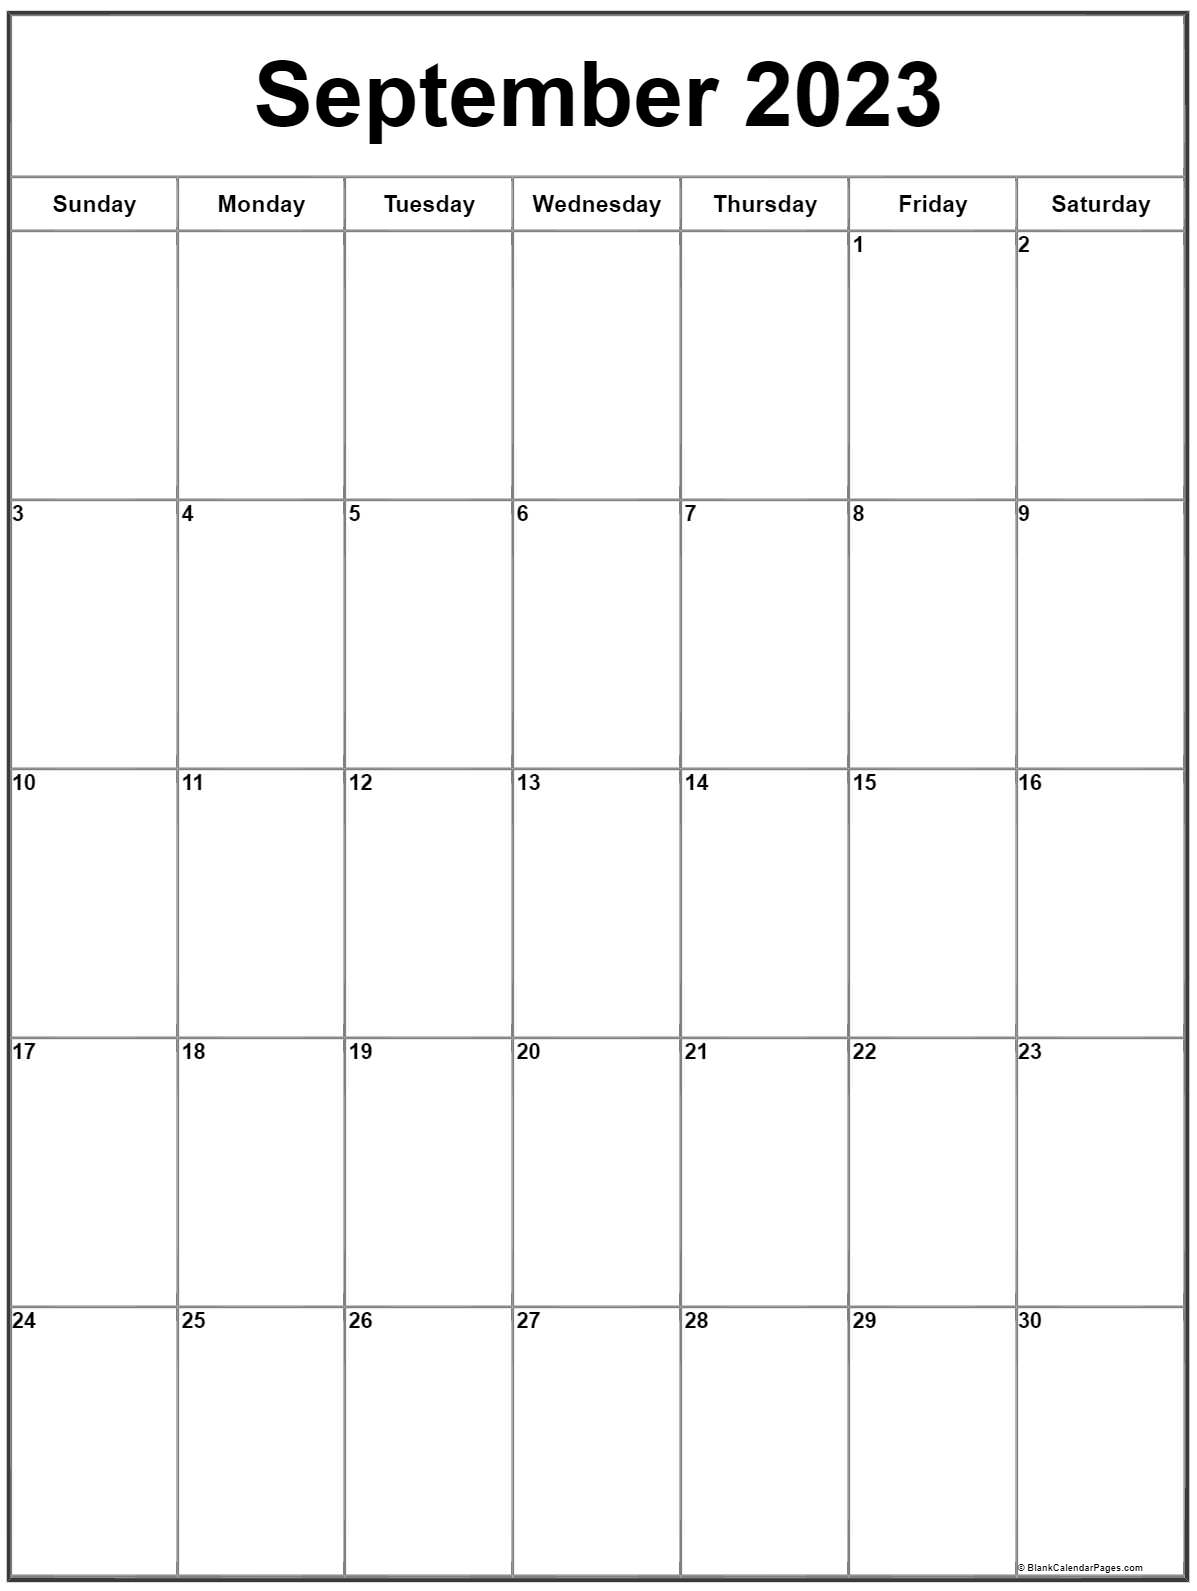 September Blank Calendar Printable prntbl concejomunicipaldechinu gov co